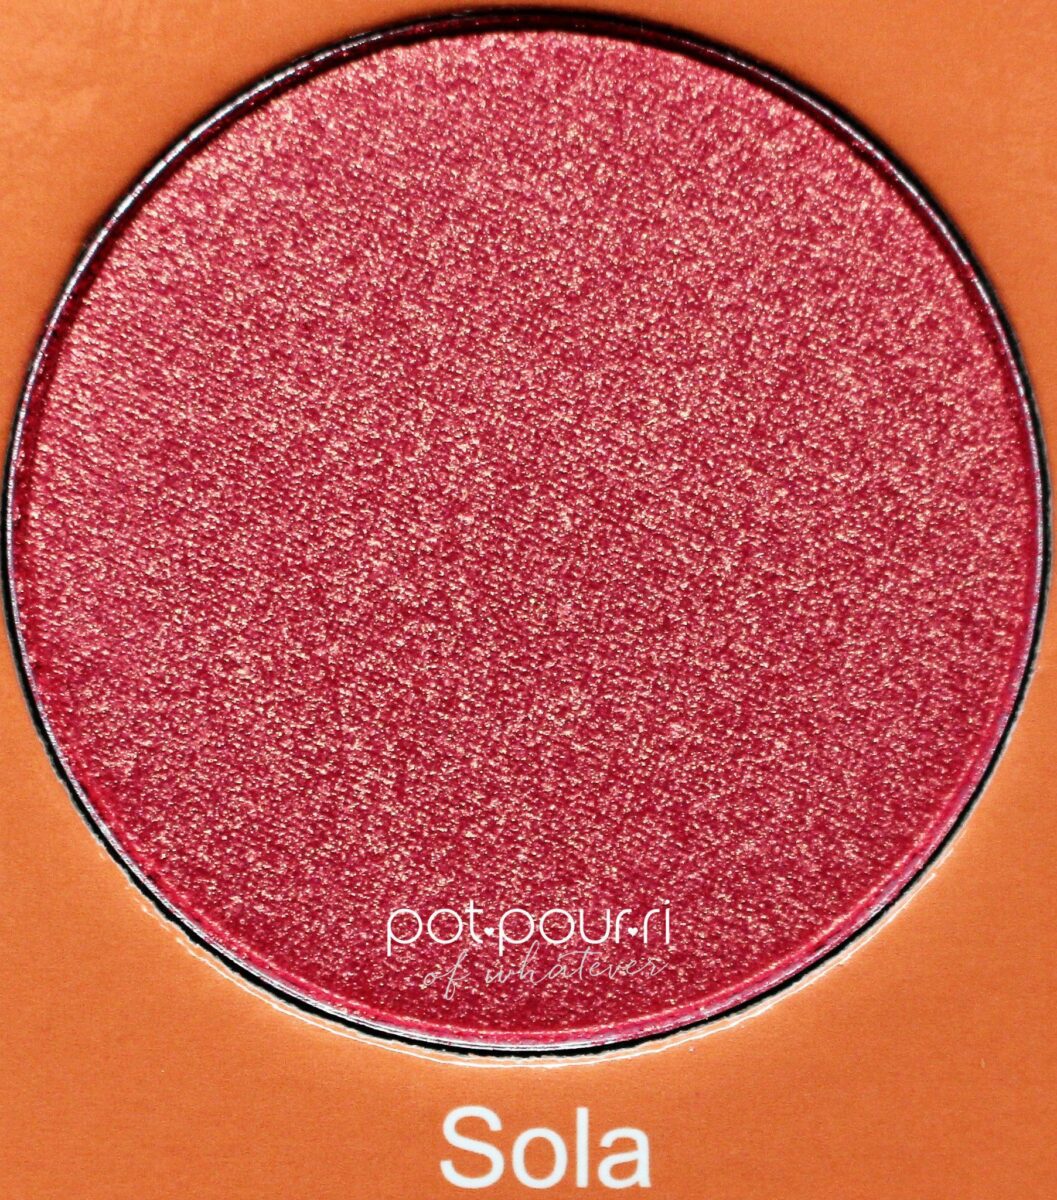 Juvia-saharan-blush-palette-vol-11-Sola-bright-pink-orange-duochrome-shimmer